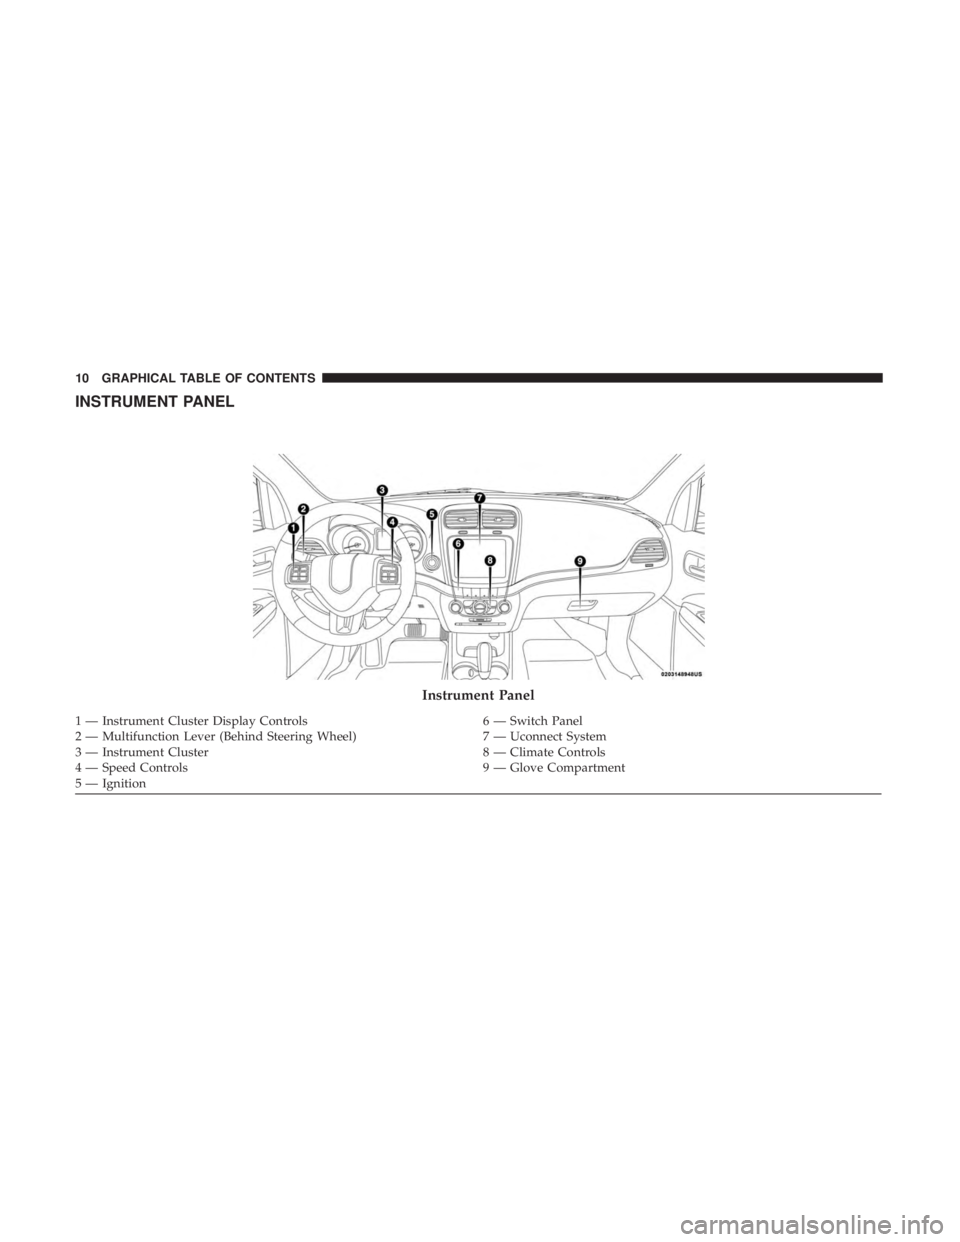 DODGE JOURNEY 2019 User Guide INSTRUMENT PANEL
Instrument Panel
1 — Instrument Cluster Display Controls6 — Switch Panel
2 — Multifunction Lever (Behind Steering Wheel) 7 — Uconnect System
3 — Instrument Cluster 8 — Cli